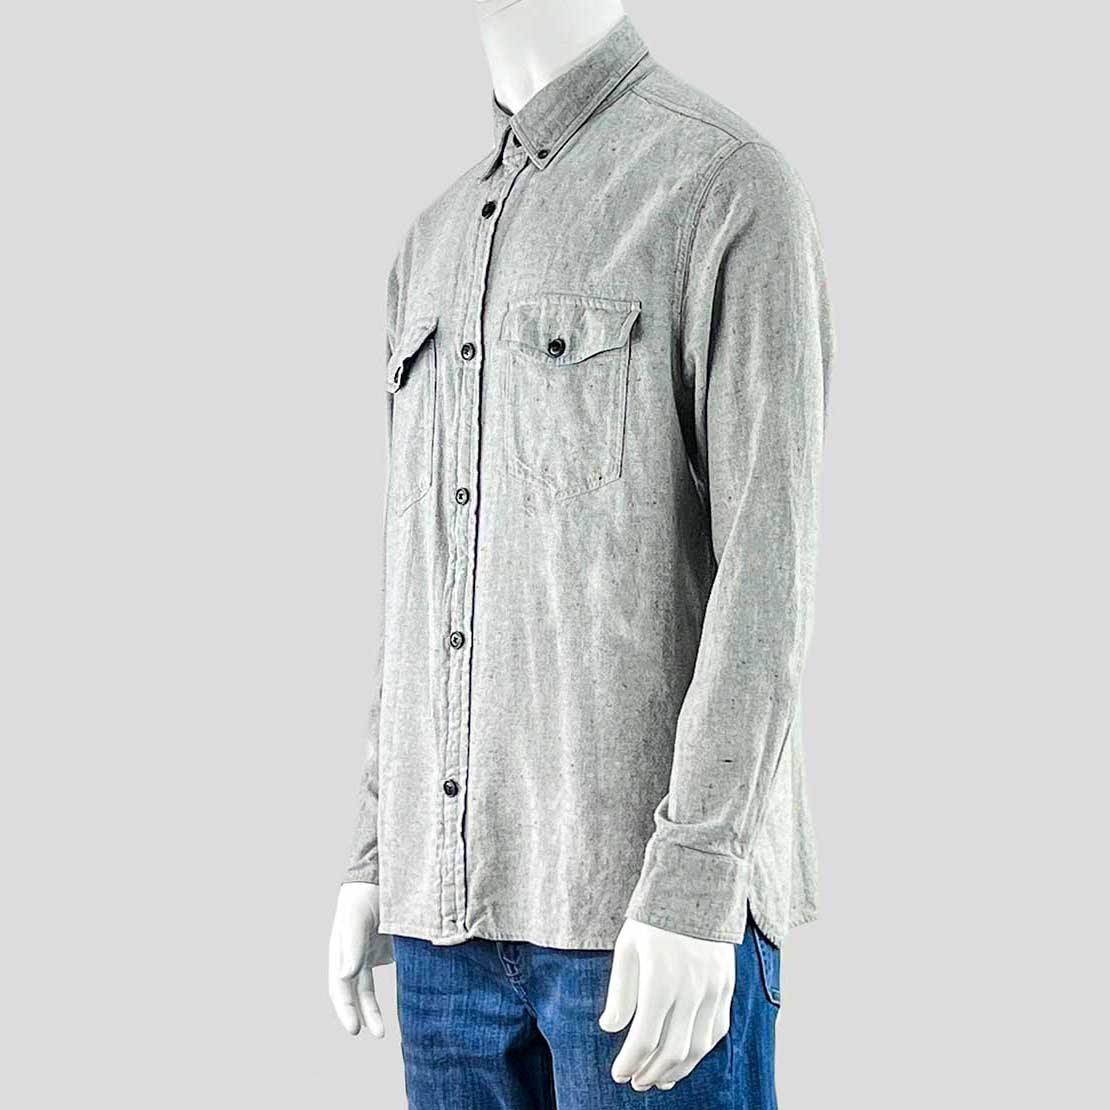 Banana Republic grey button-down light flannel shirt - Large